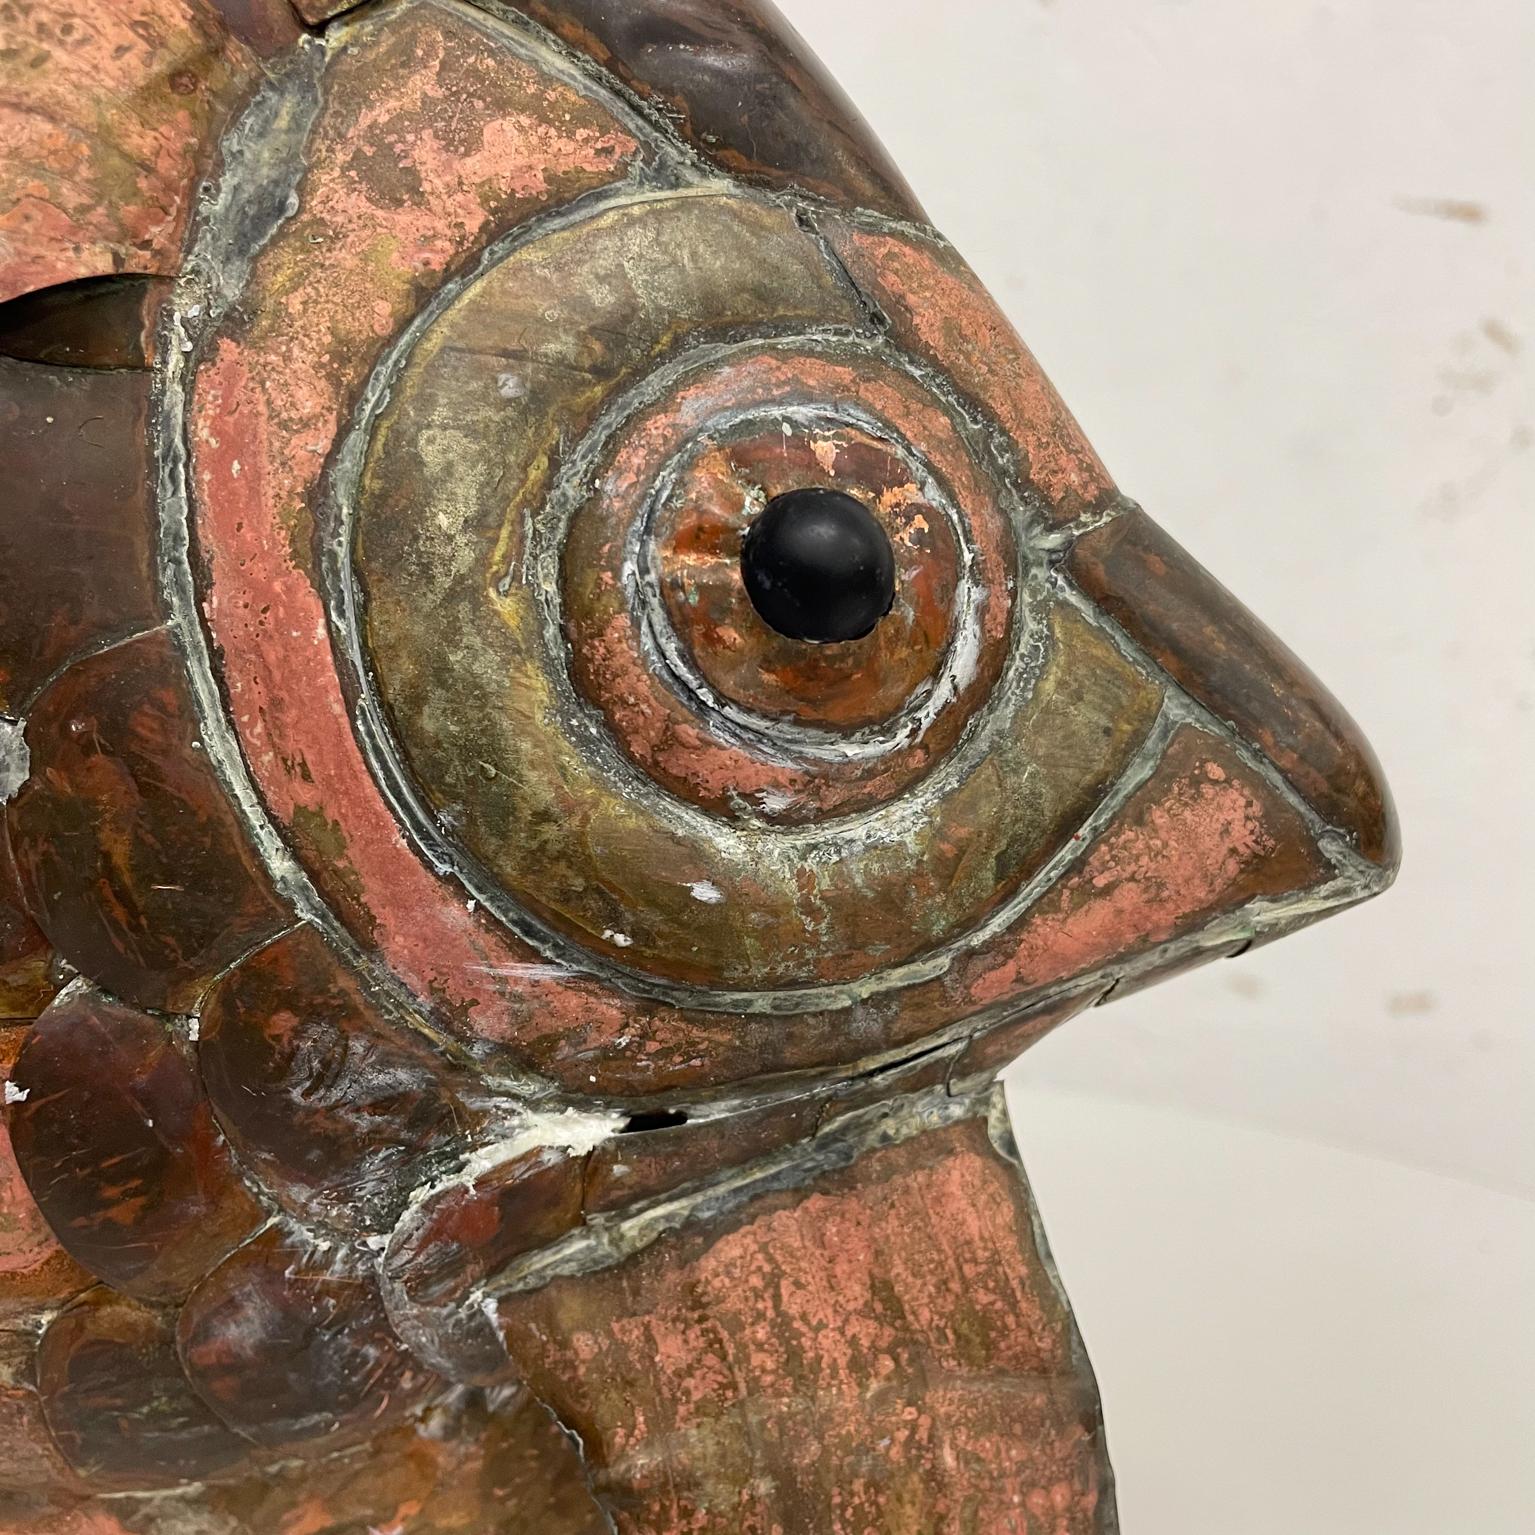 copper fish sculpture